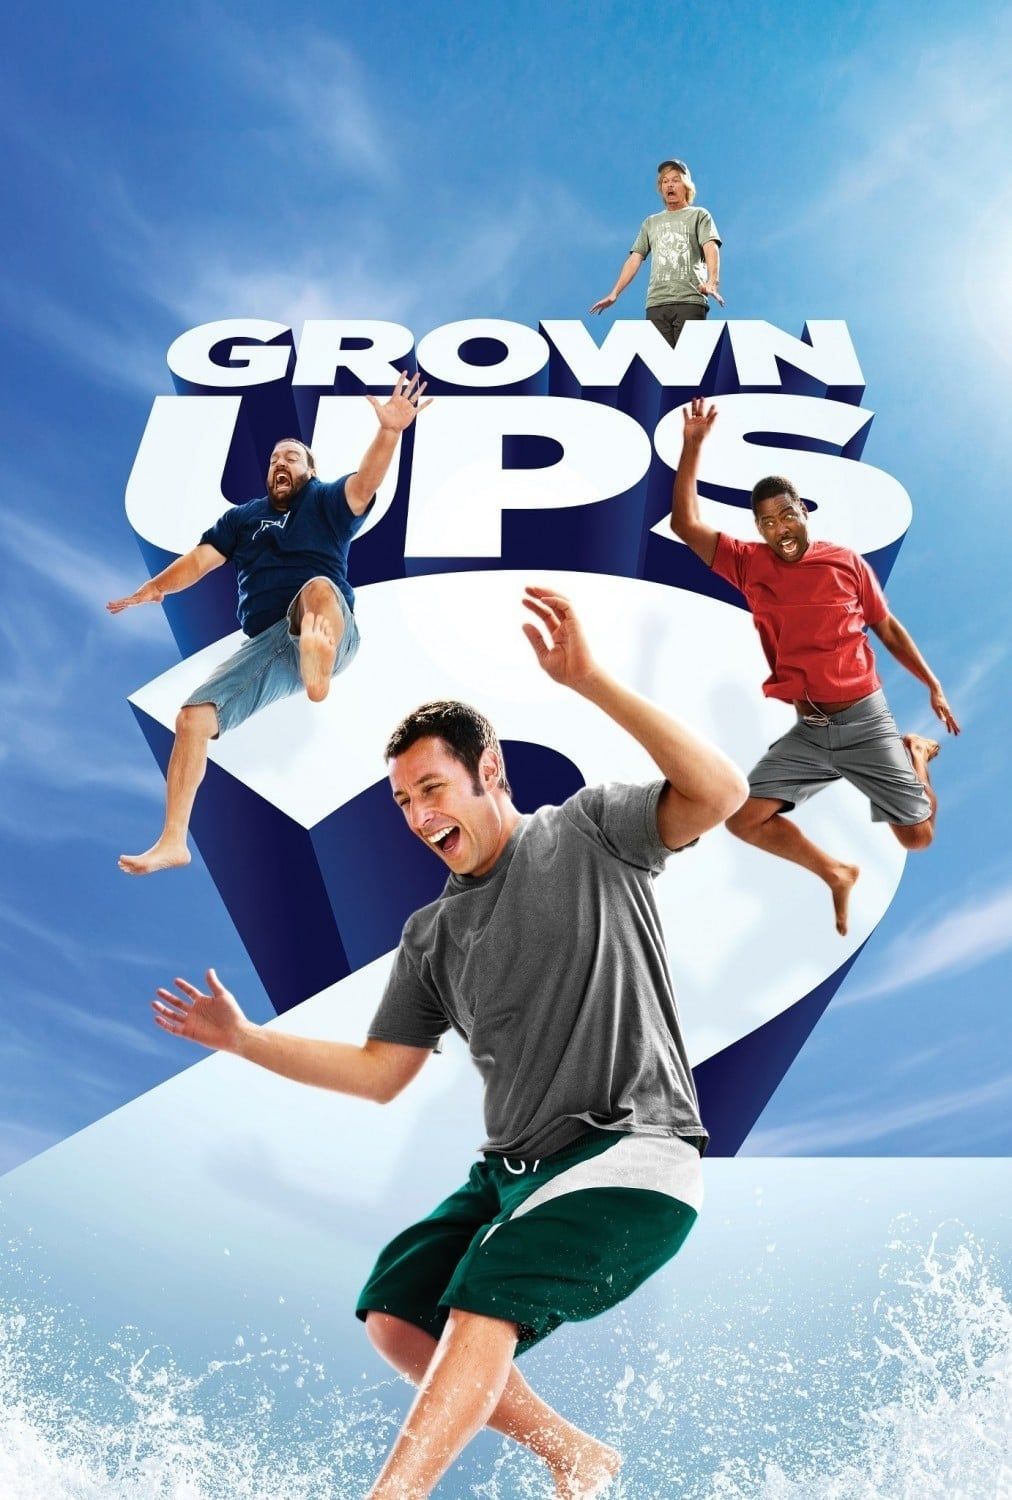 Grown Ups 2 TV SPOT - The Boys Are Back (2013) - Adam Sandler